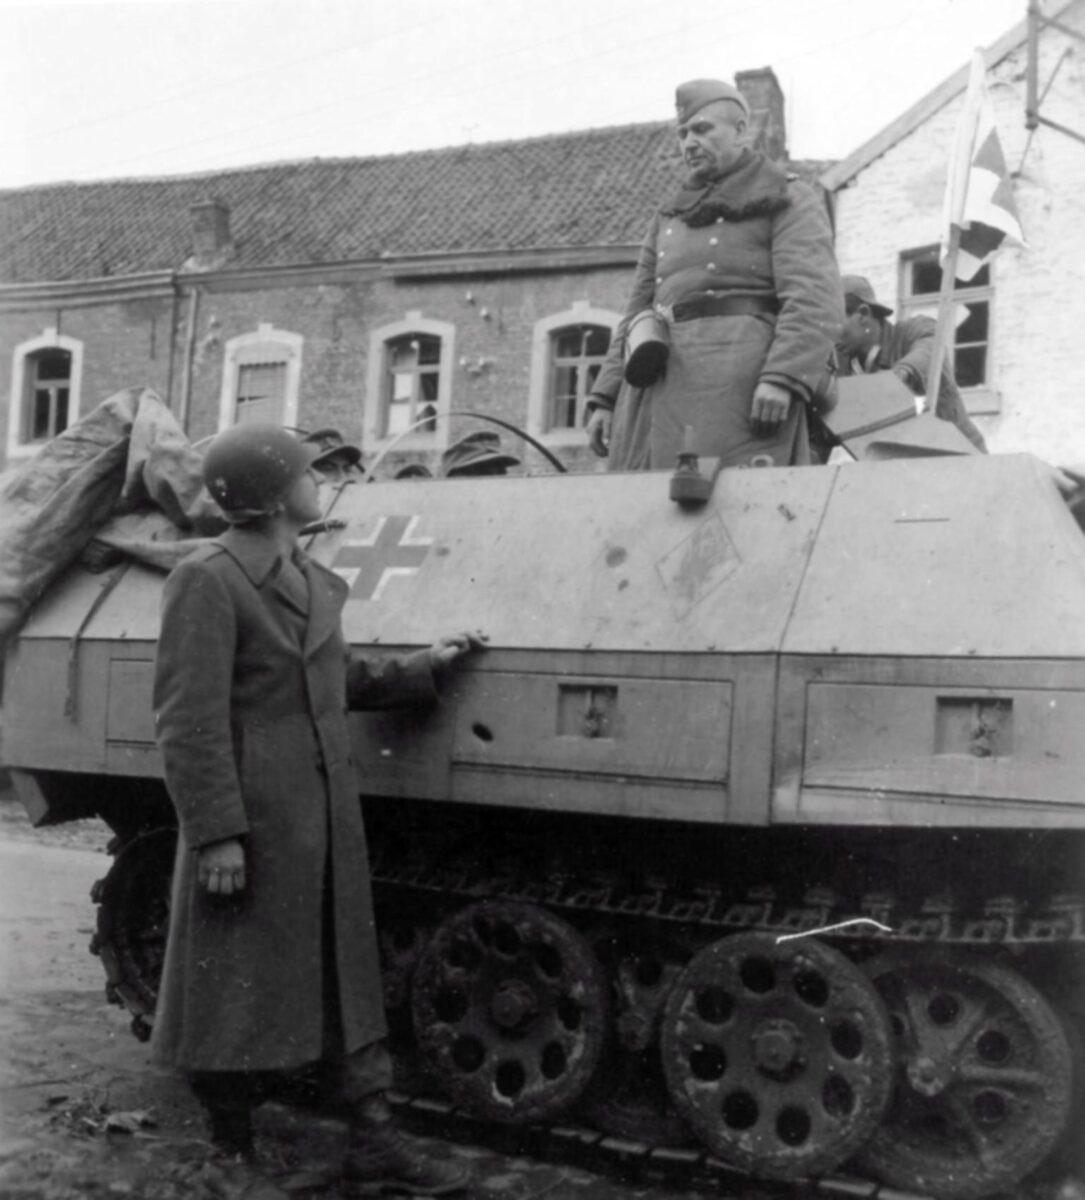 Captured German soldiers